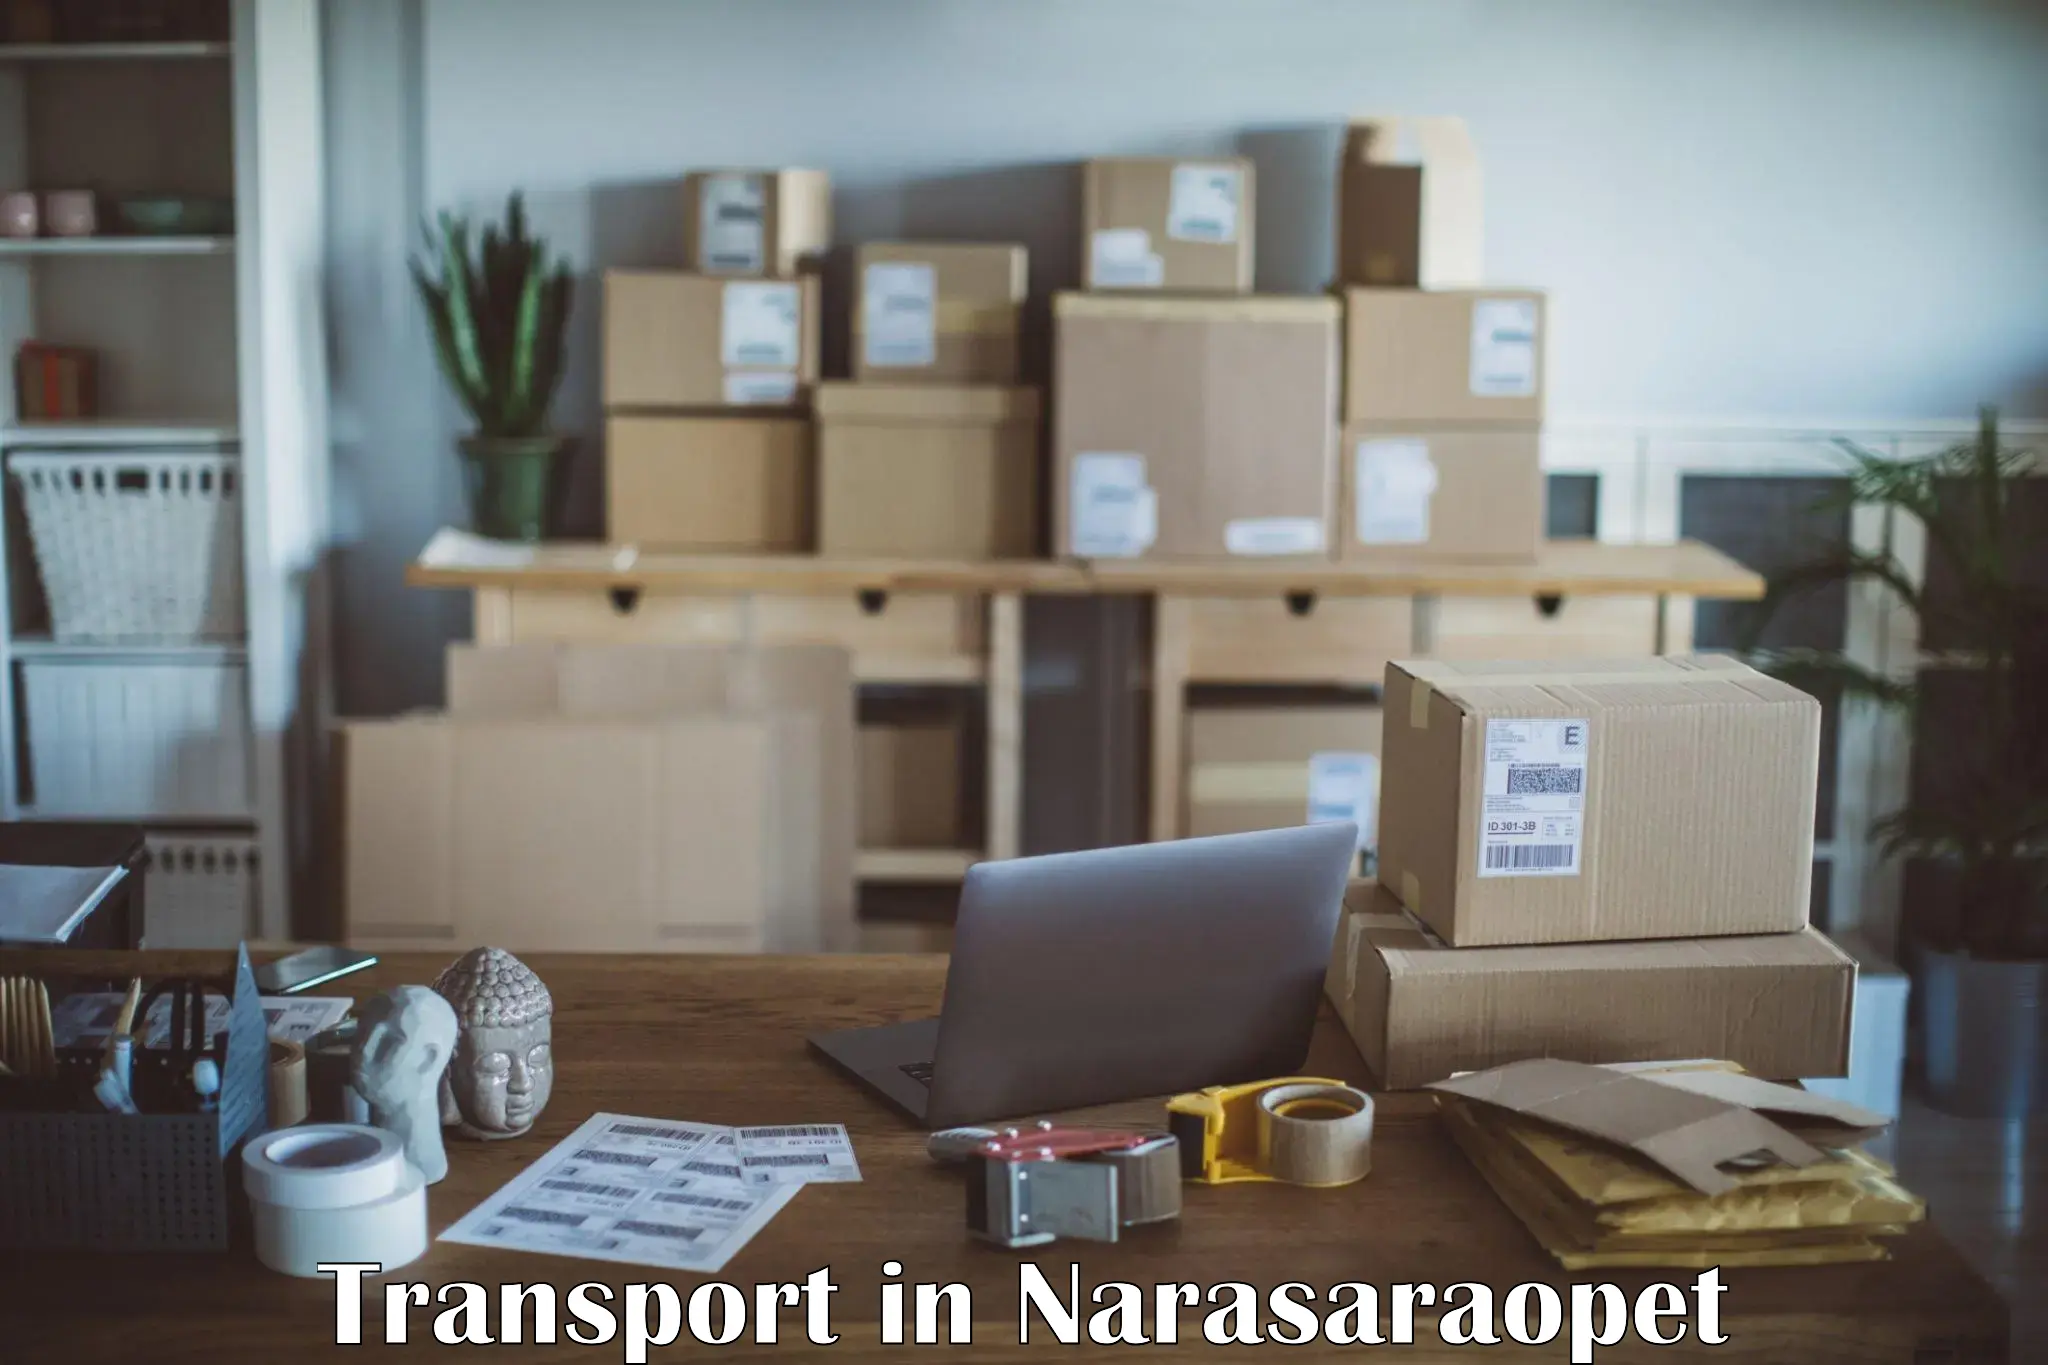 Road transport online services in Narasaraopet